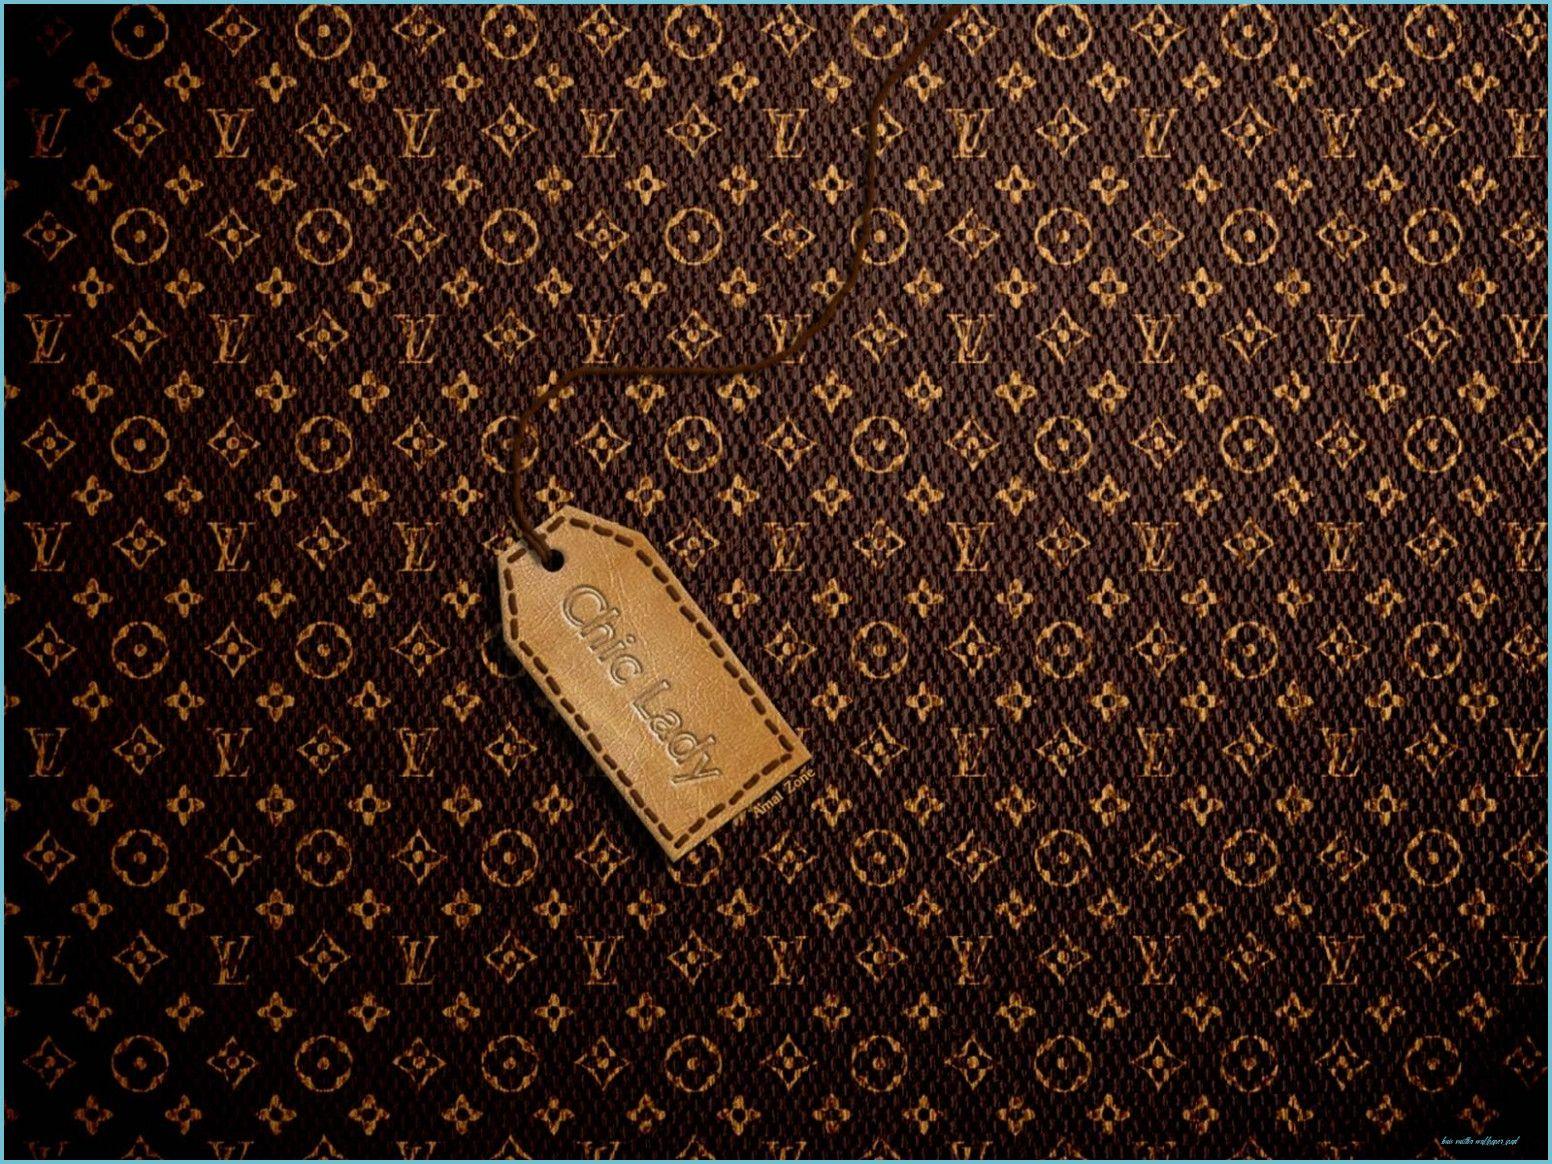 Hình nền Louis Vuitton 1552x1164 Louis Vuitton - Louis Vuitton hình nền ipad